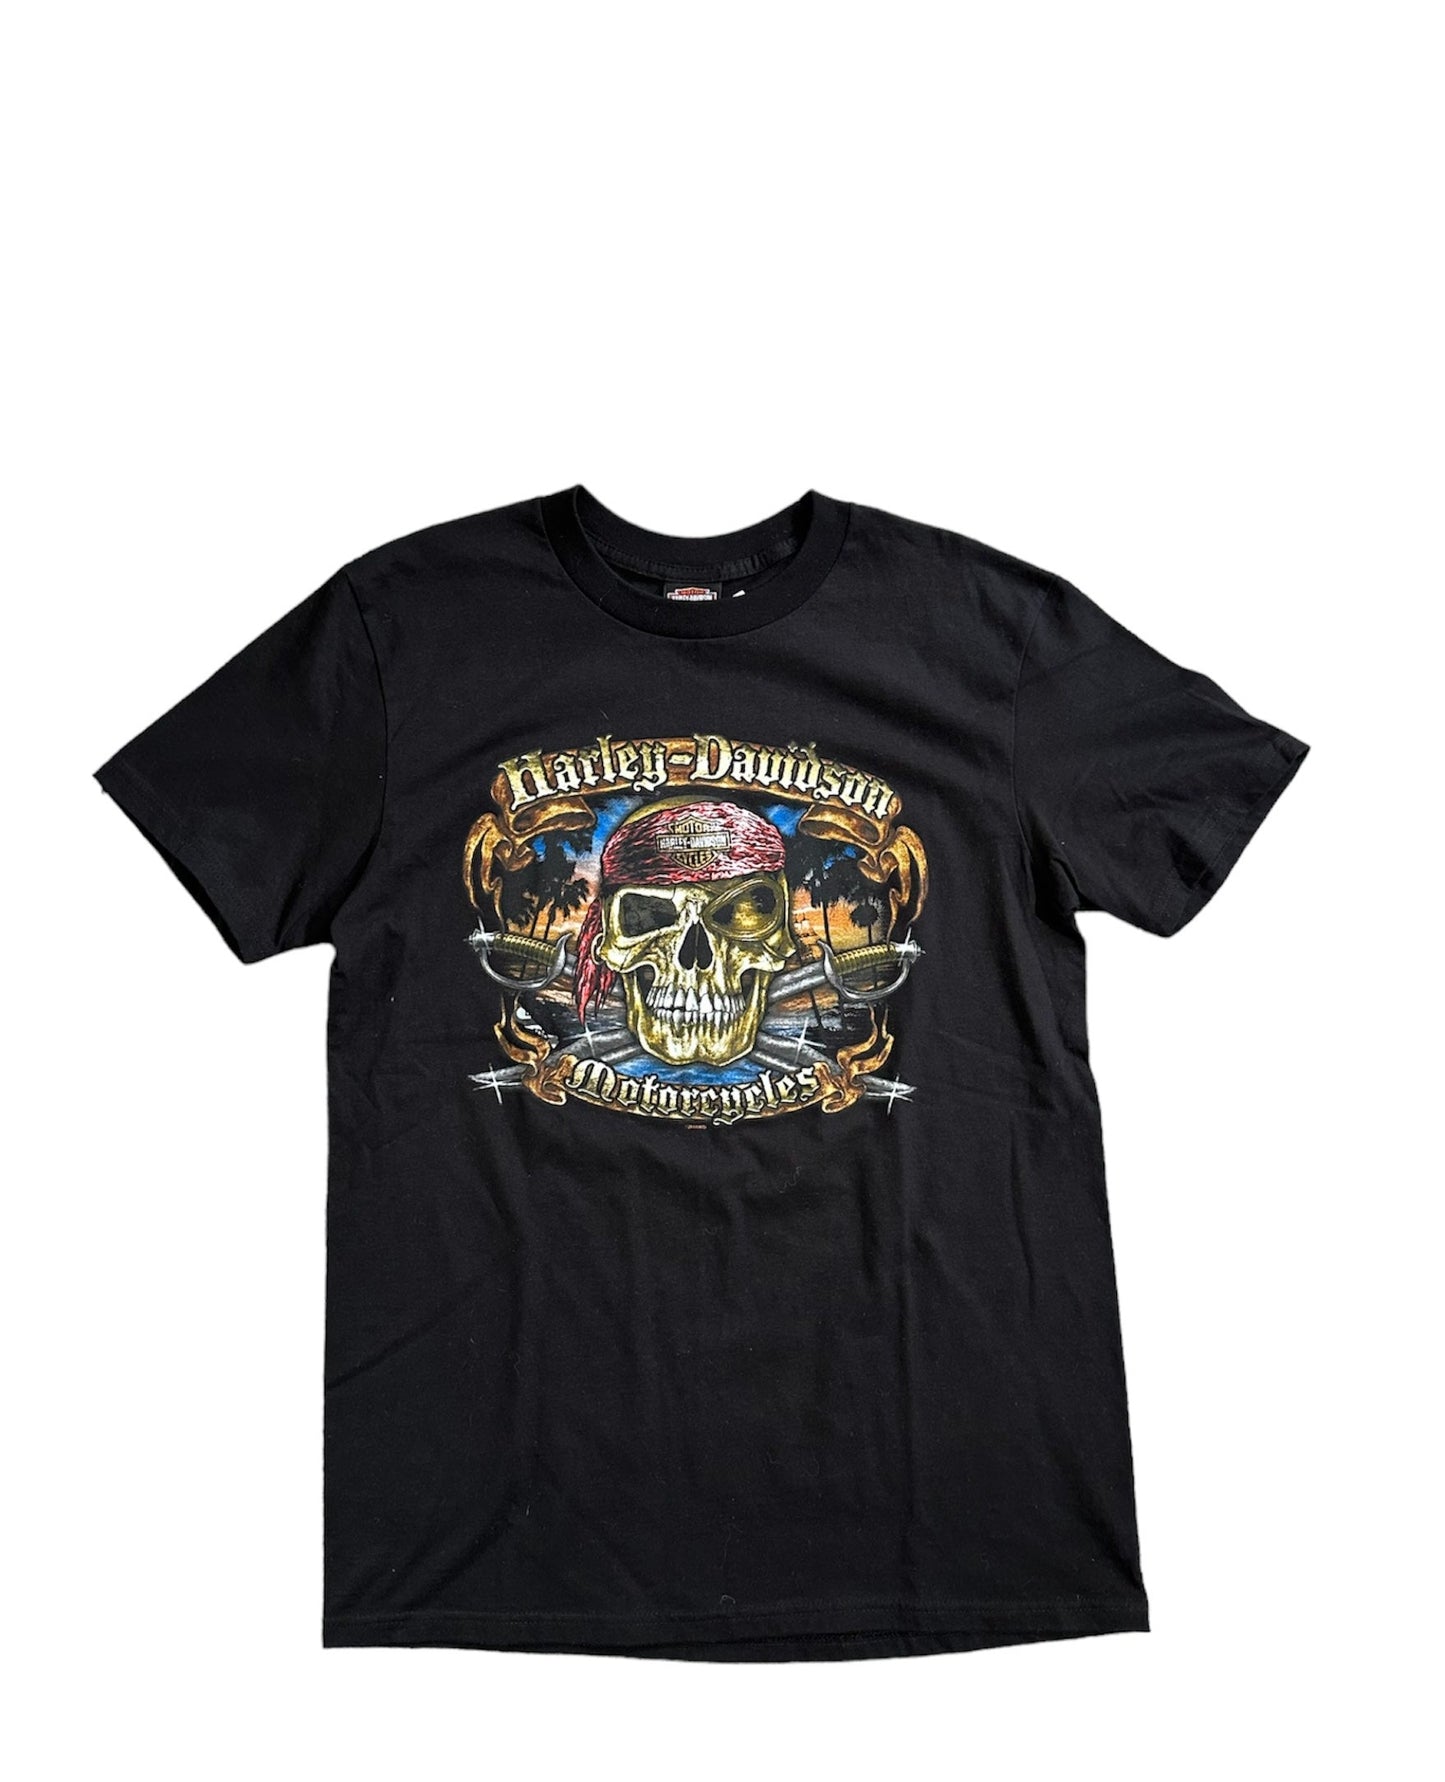 Harley Davidson 2010 Pirates Orlando, Florida T-shirt